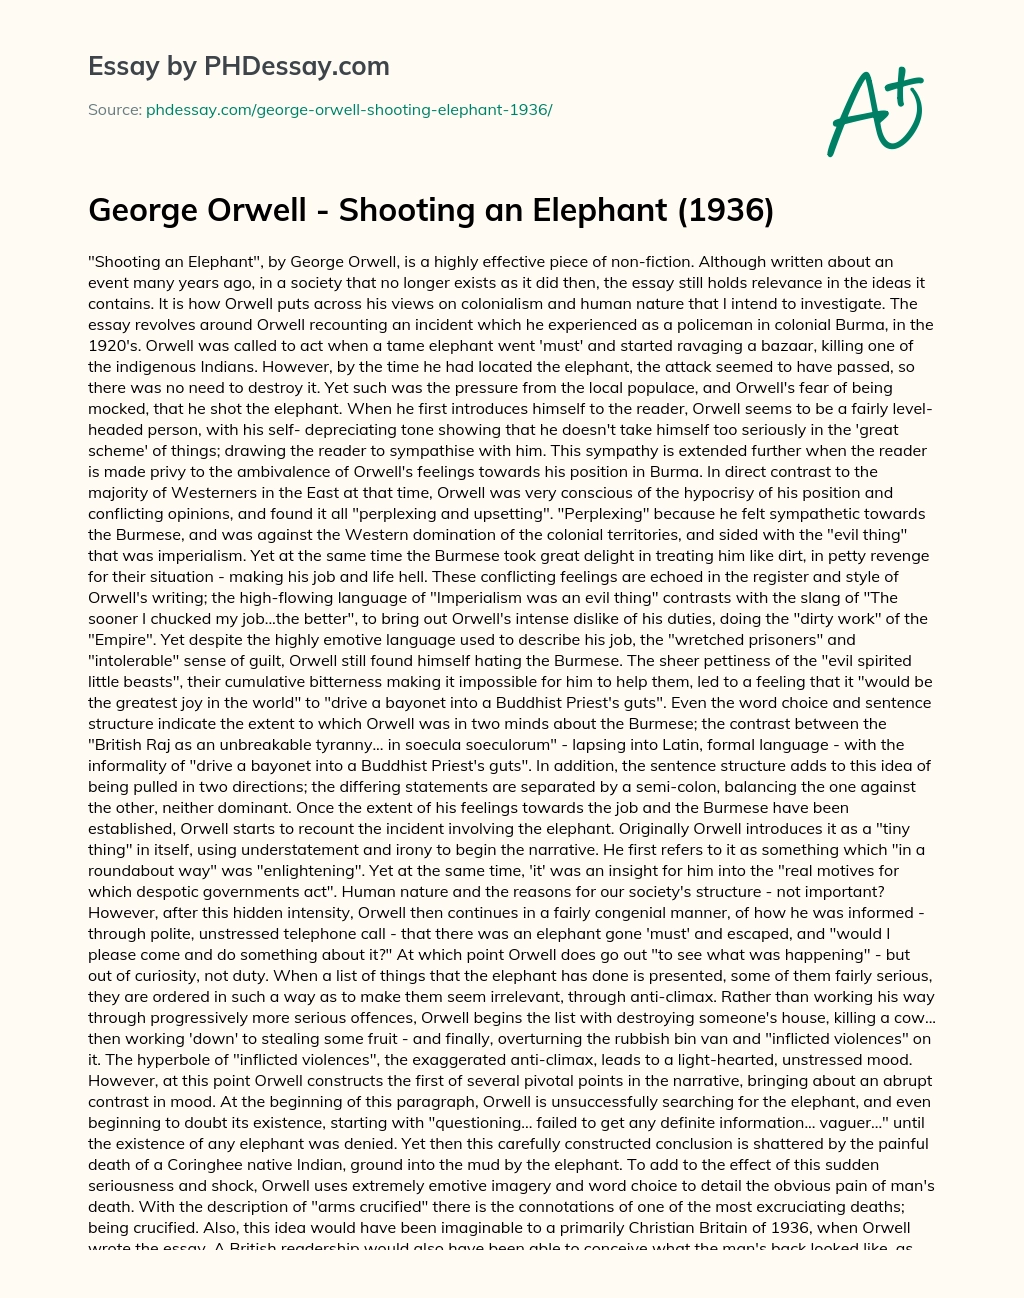 George Orwell – Shooting an Elephant (1936) essay